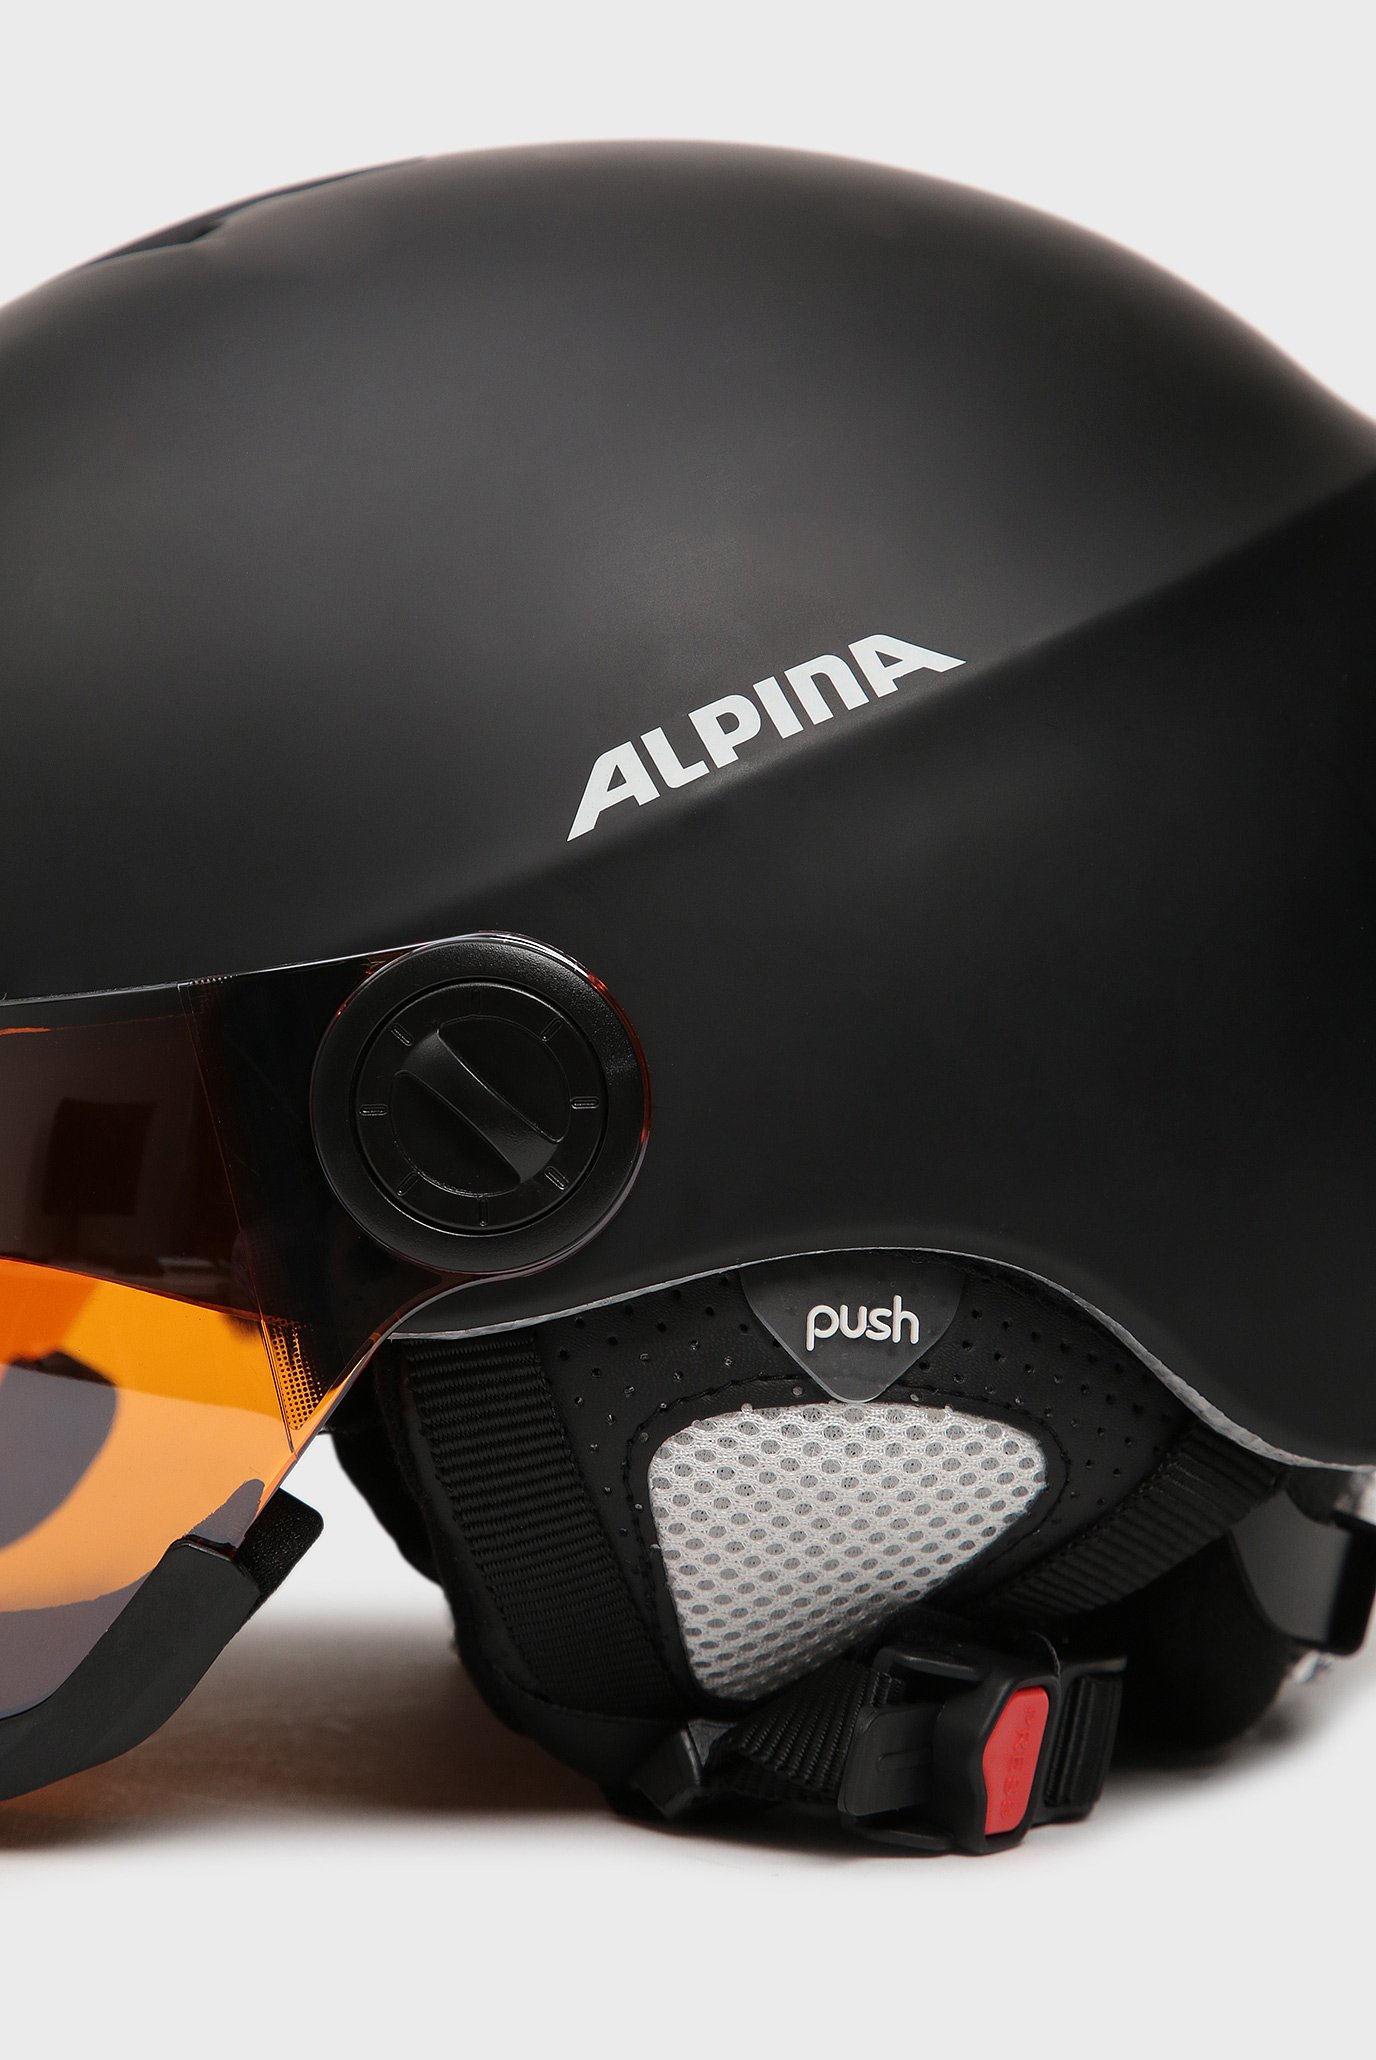 Monteur Lake Taupo residentie Черный горнолыжный шлем с маской MENGA JV Alpina A9061-31 — MD-Fashion